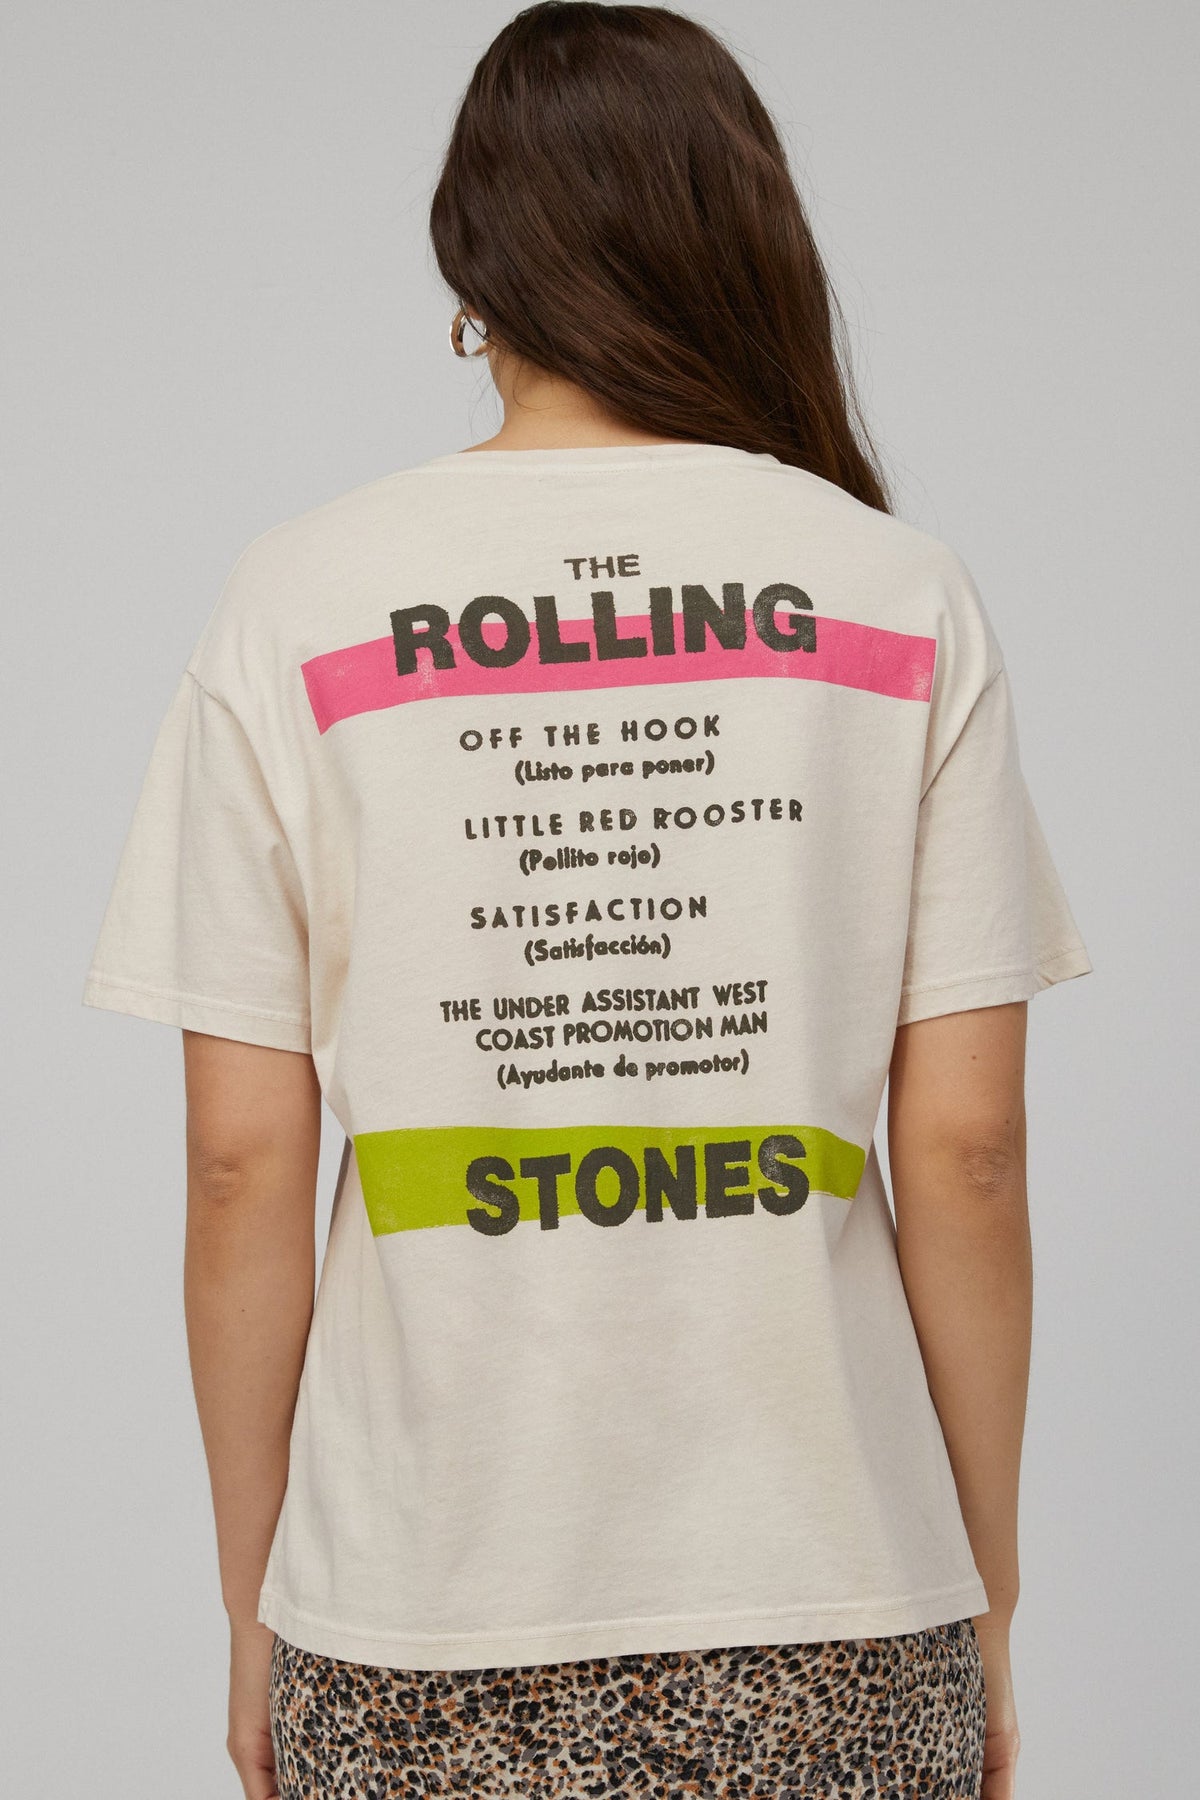 Daydreamer - Rolling Stones - Satisfaction Boyfriend T Shirt